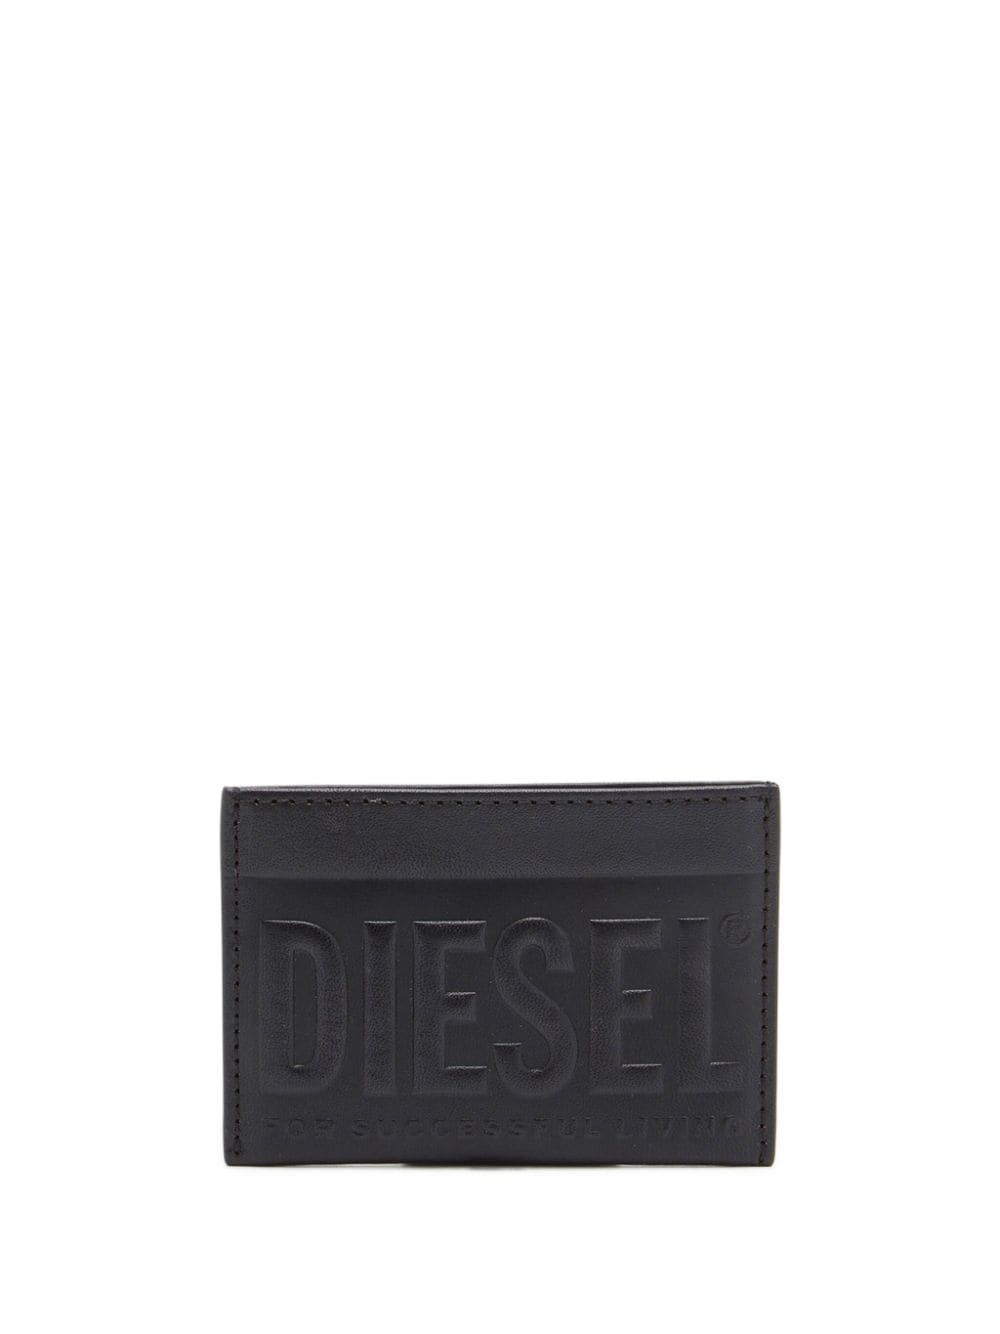 Diesel DSL 3D Easy leather cardholder - Black von Diesel